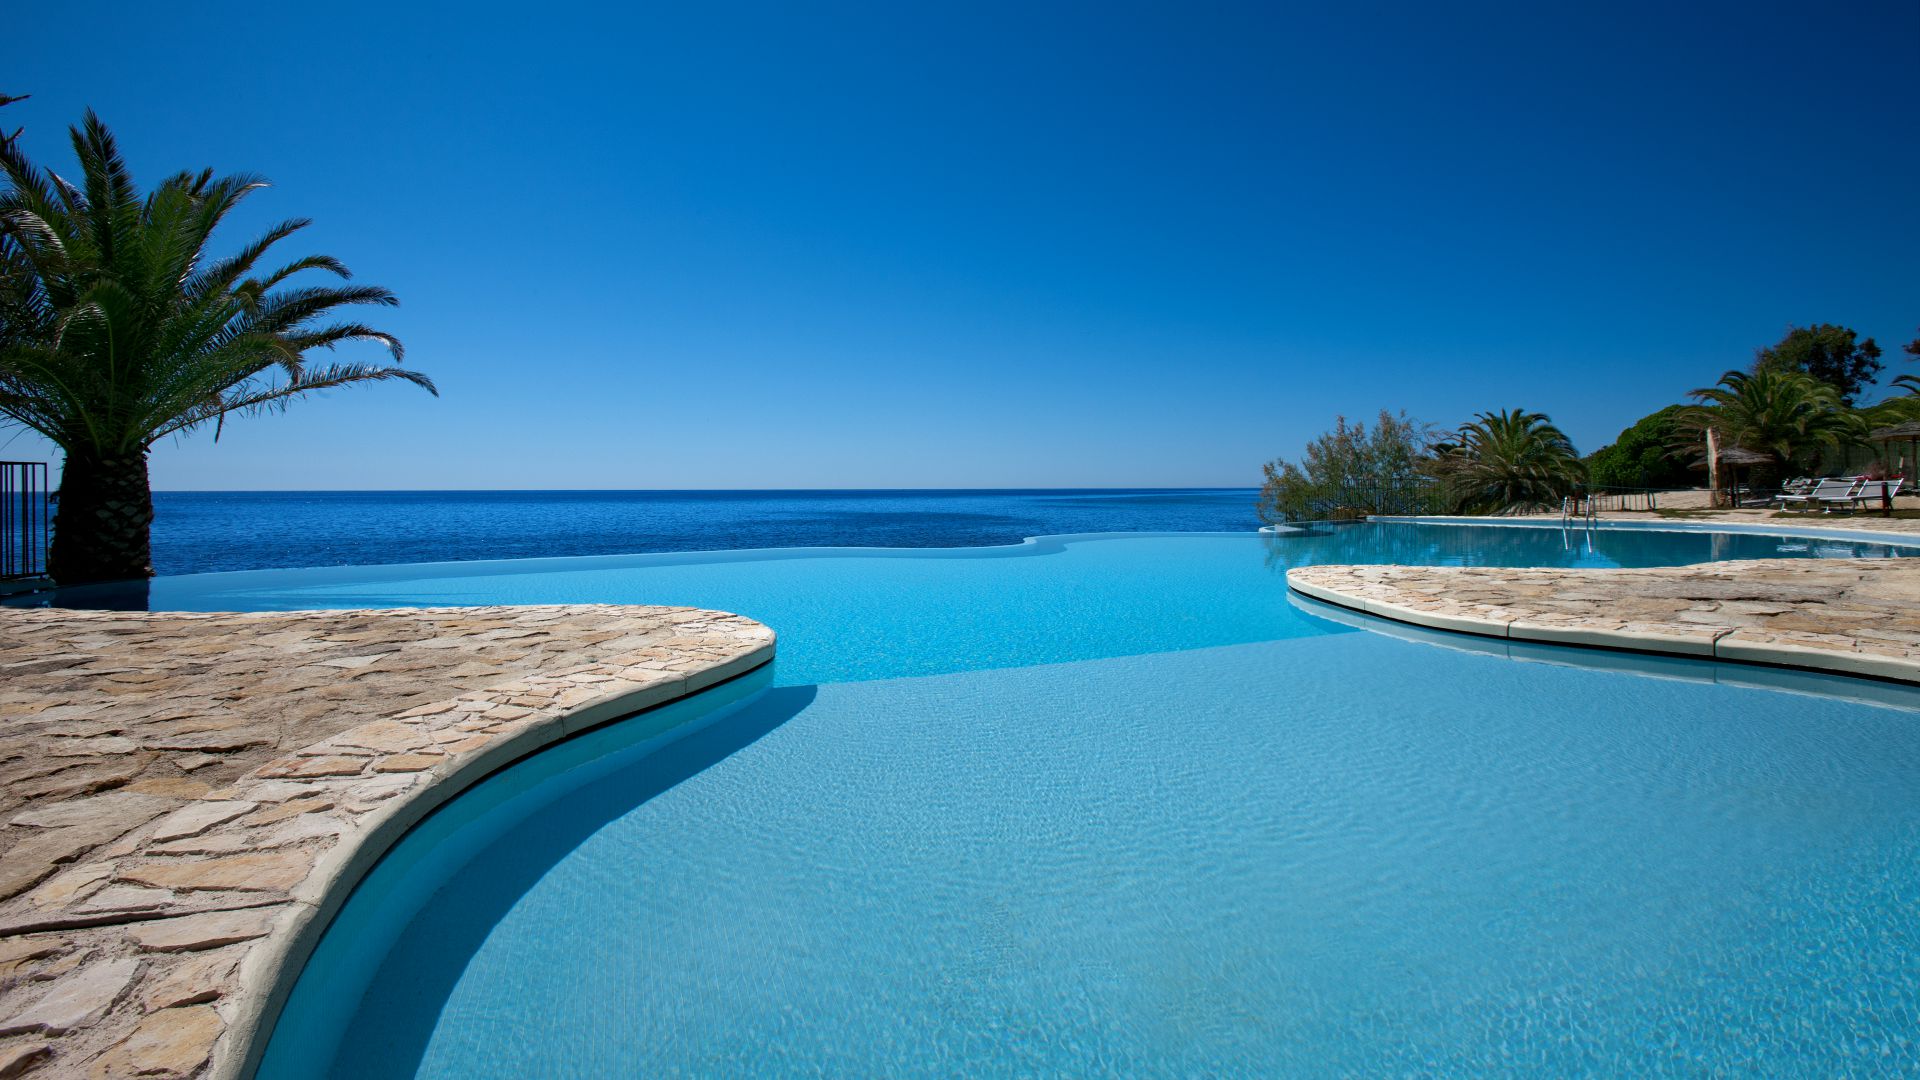 Hotel Costa dei Fiori, 5k, 4k wallpaper, Sardinia, Italy, infinity pool, pool, travel, tourism (horizontal)